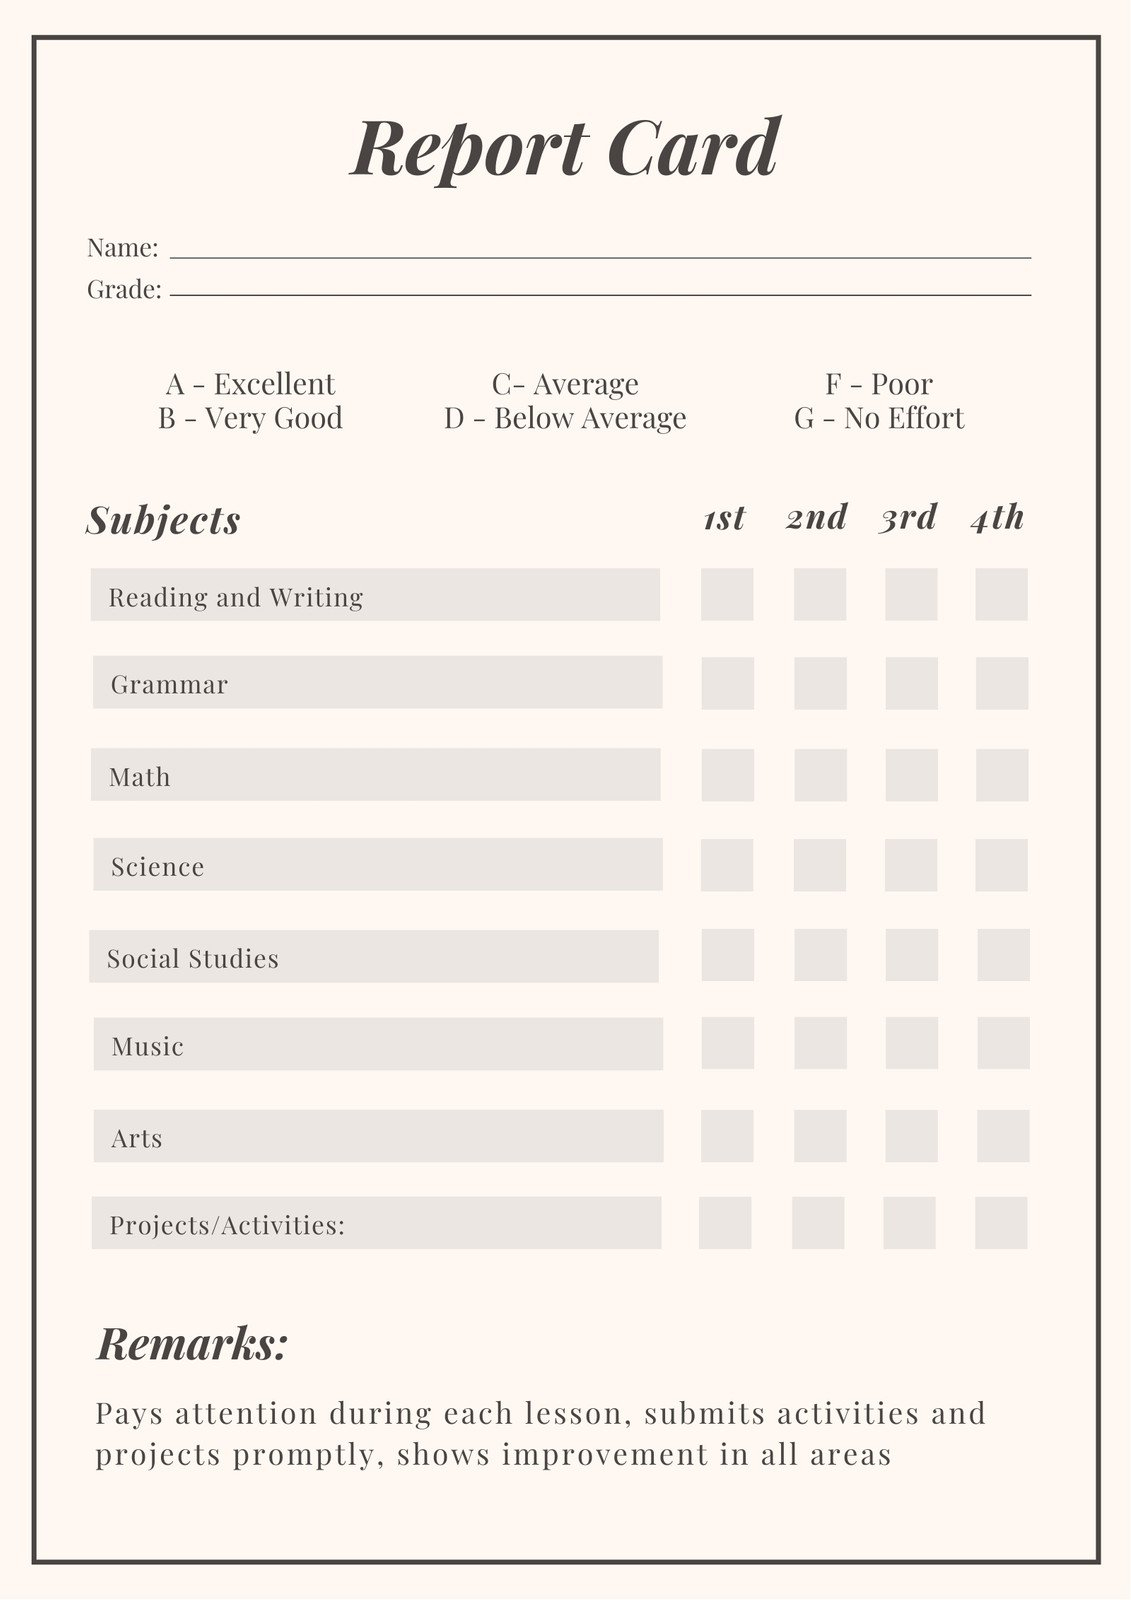 Free, printable, customizable report card templates  Canva Regarding Blank Report Card Template